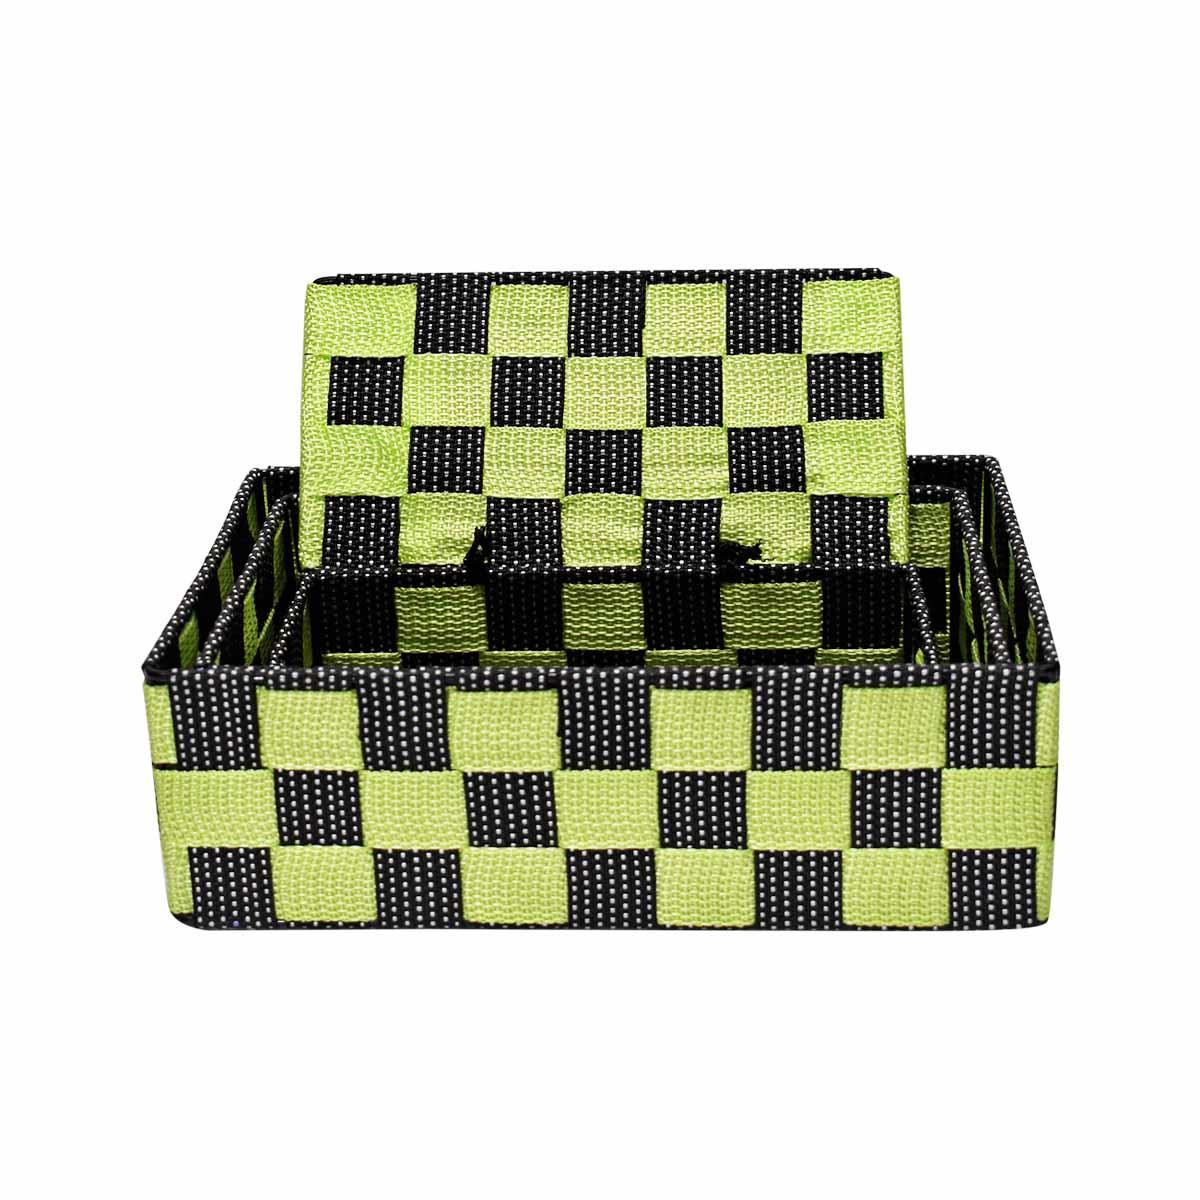 Woven Storage Organizer Nylon Basket Set of 3 Tote Bins (46-4935)